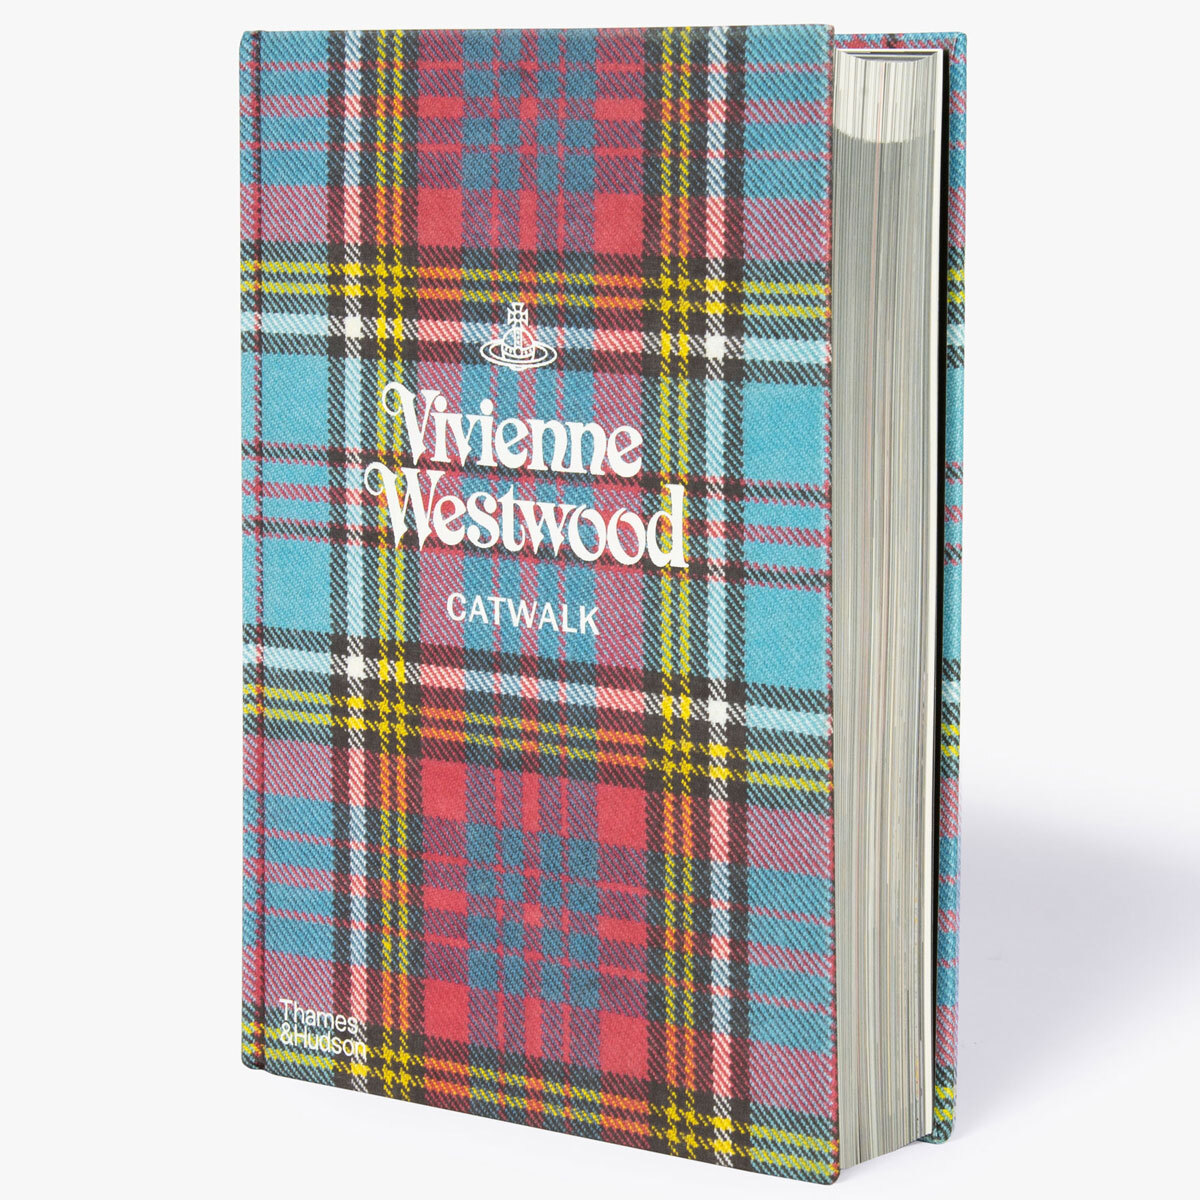 Vivienne Westwood Catwalk Collection 